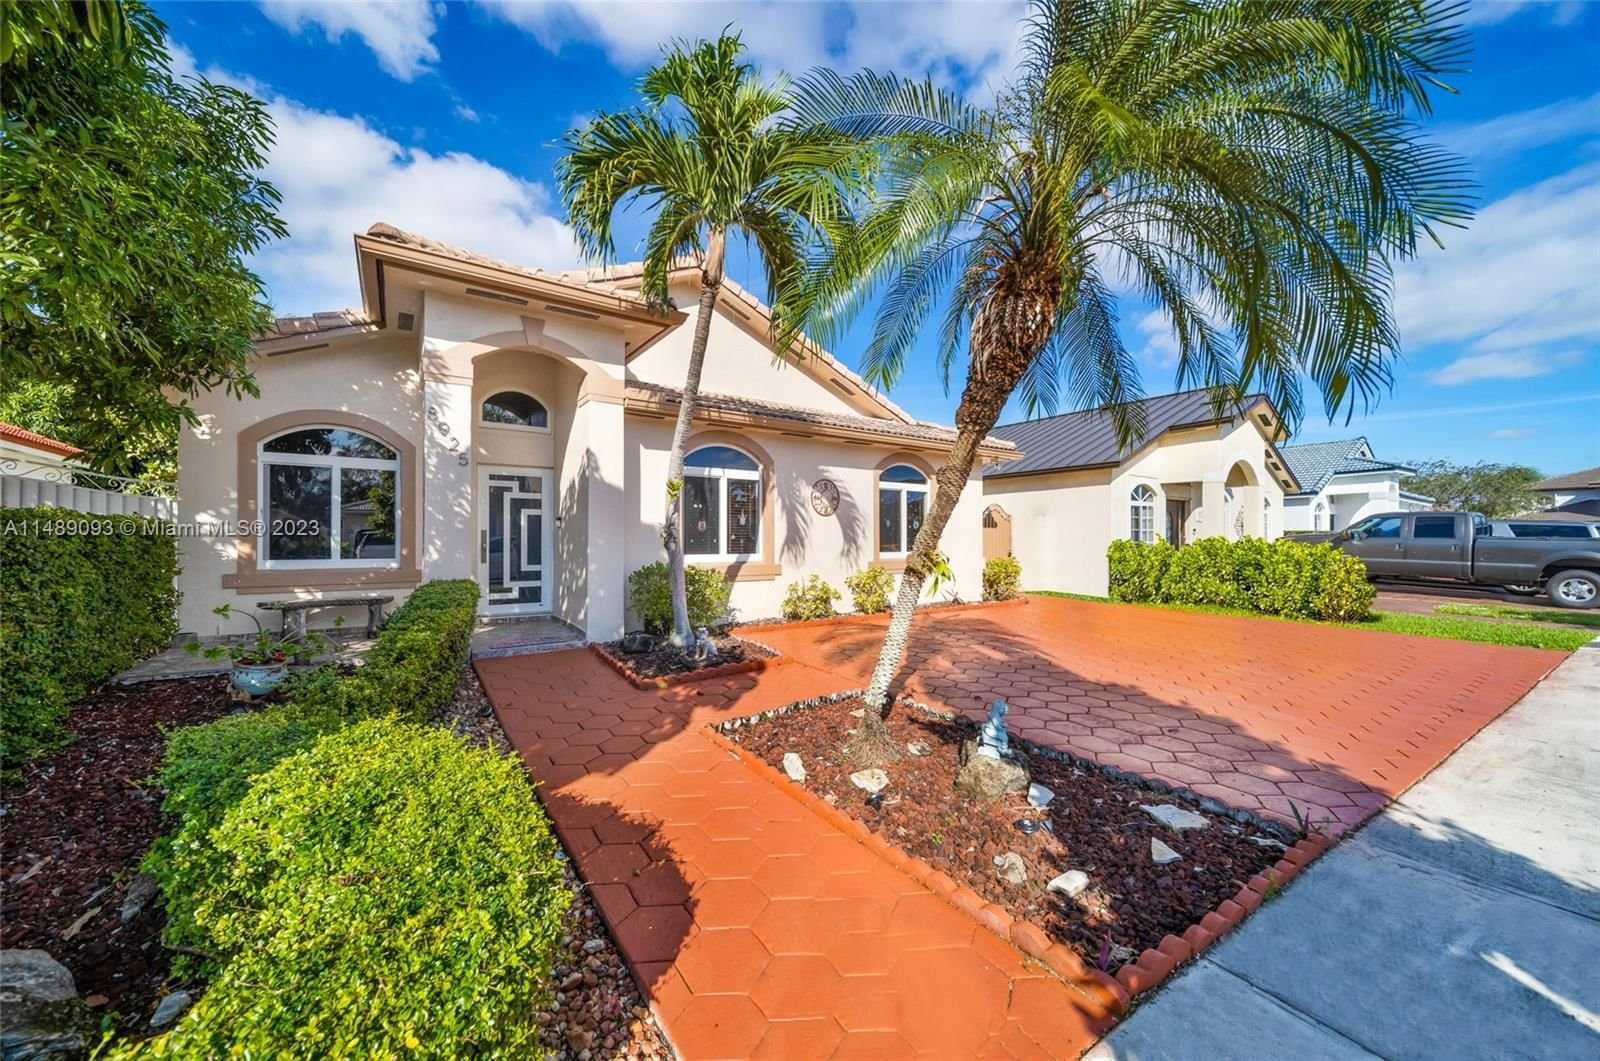 Real estate property located at 8925 144th Ter, Miami-Dade County, TRESOR, Miami Lakes, FL